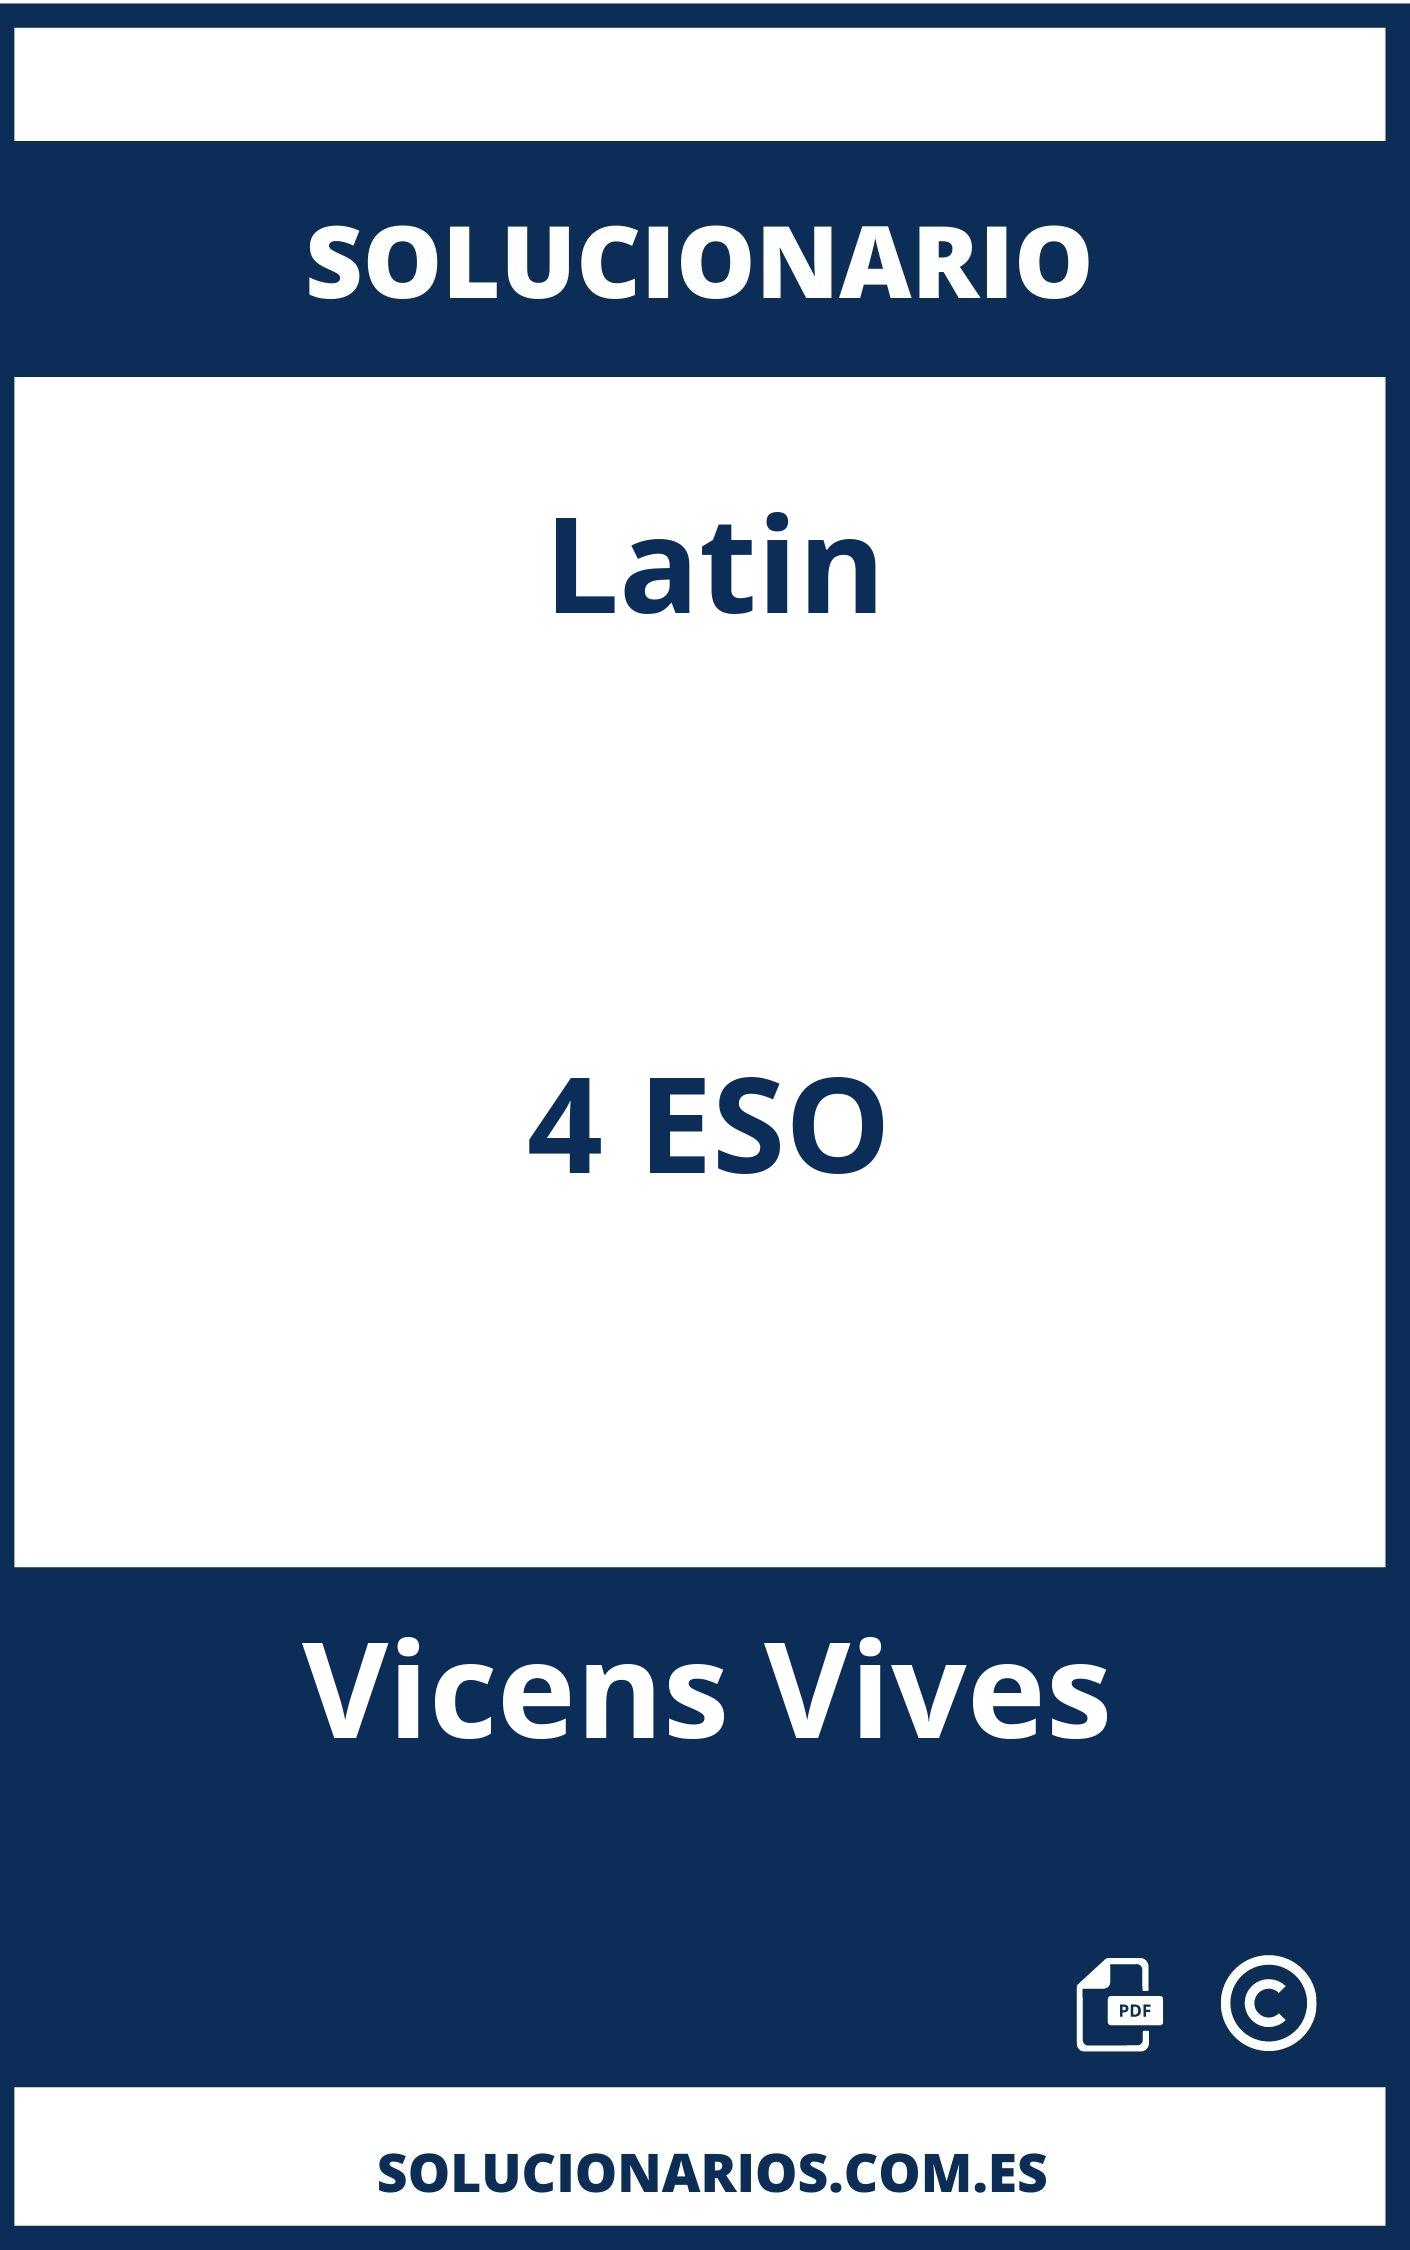 Solucionario Latin 4 ESO Vicens Vives